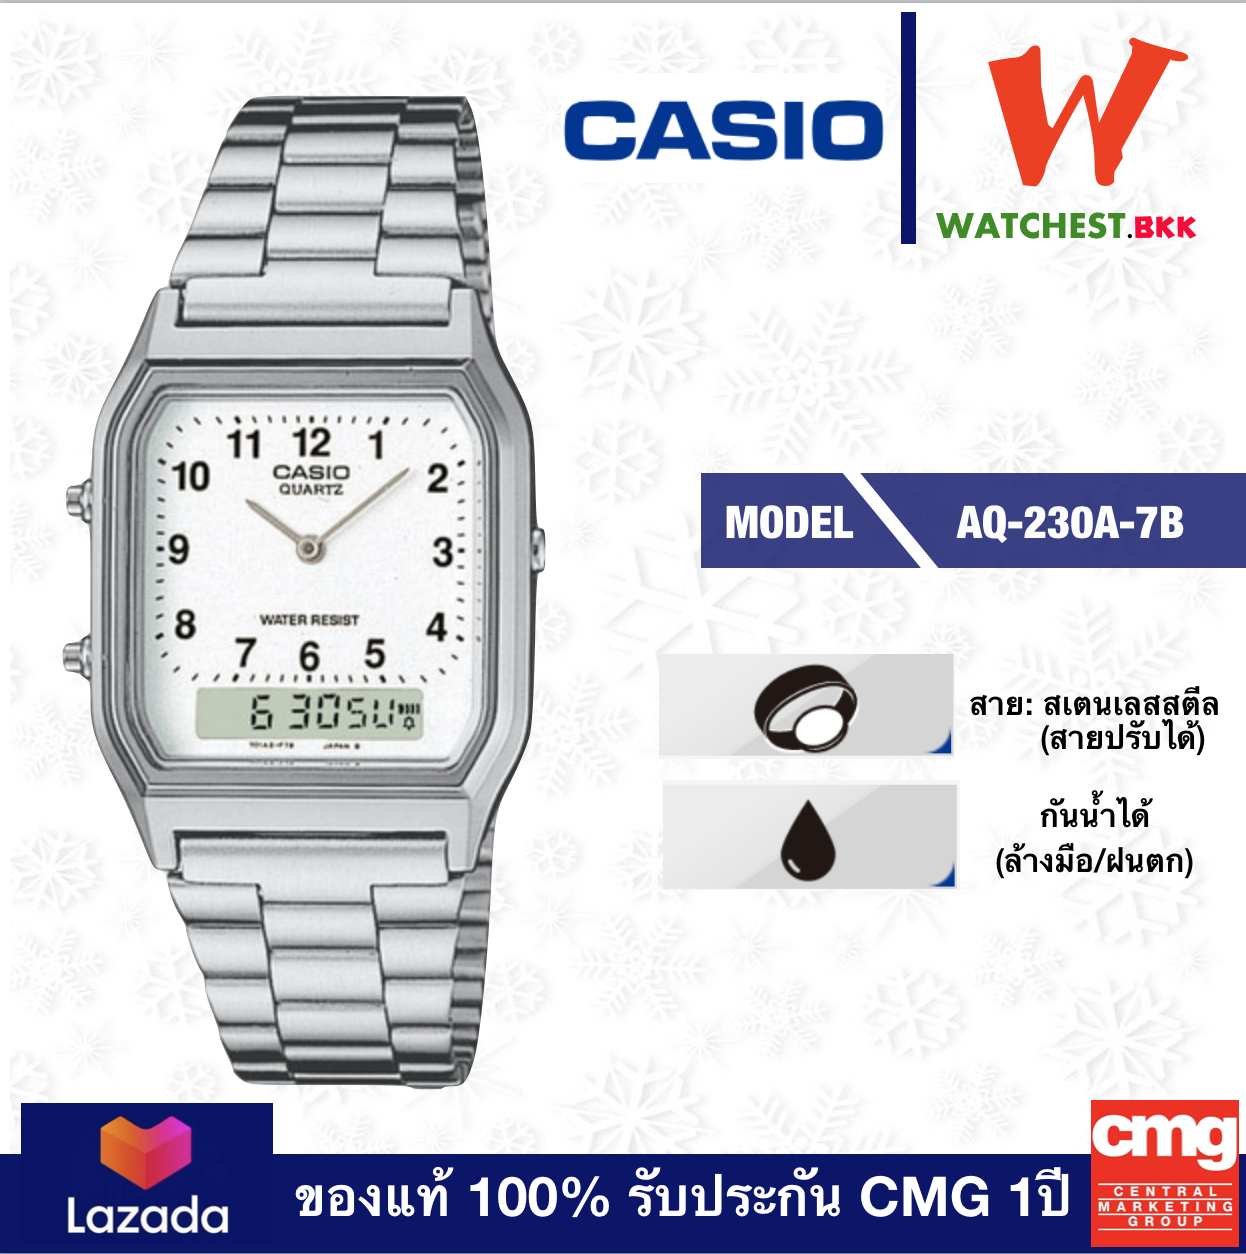 casio นาฬิกาข้อมือผู้หญิง สายสเตนเลส เงิน รุ่น AQ-230A-7B, คาสิโอ้ AQ230, AQ-230  ข้อเลื่อนปรับระดับเองได้ สีเงิน (watchestbkk คาสิโอ แท้ ของแท้100% ประกัน CMG)